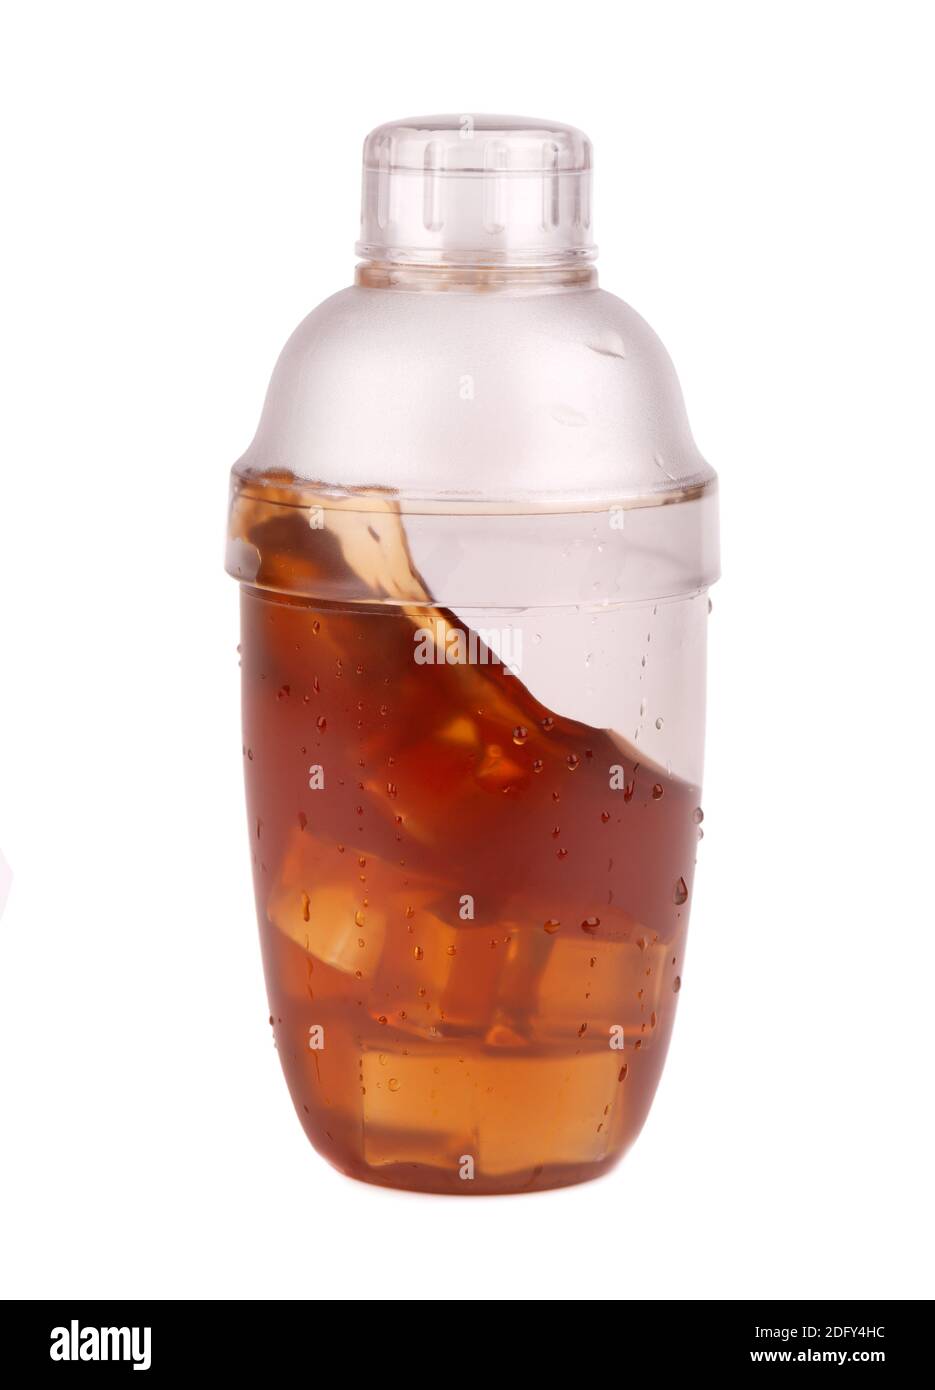 https://c8.alamy.com/comp/2DFY4HC/tea-shaker-isolated-on-white-background-plastic-shaker-of-iced-cold-bubble-tea-drinks-2DFY4HC.jpg